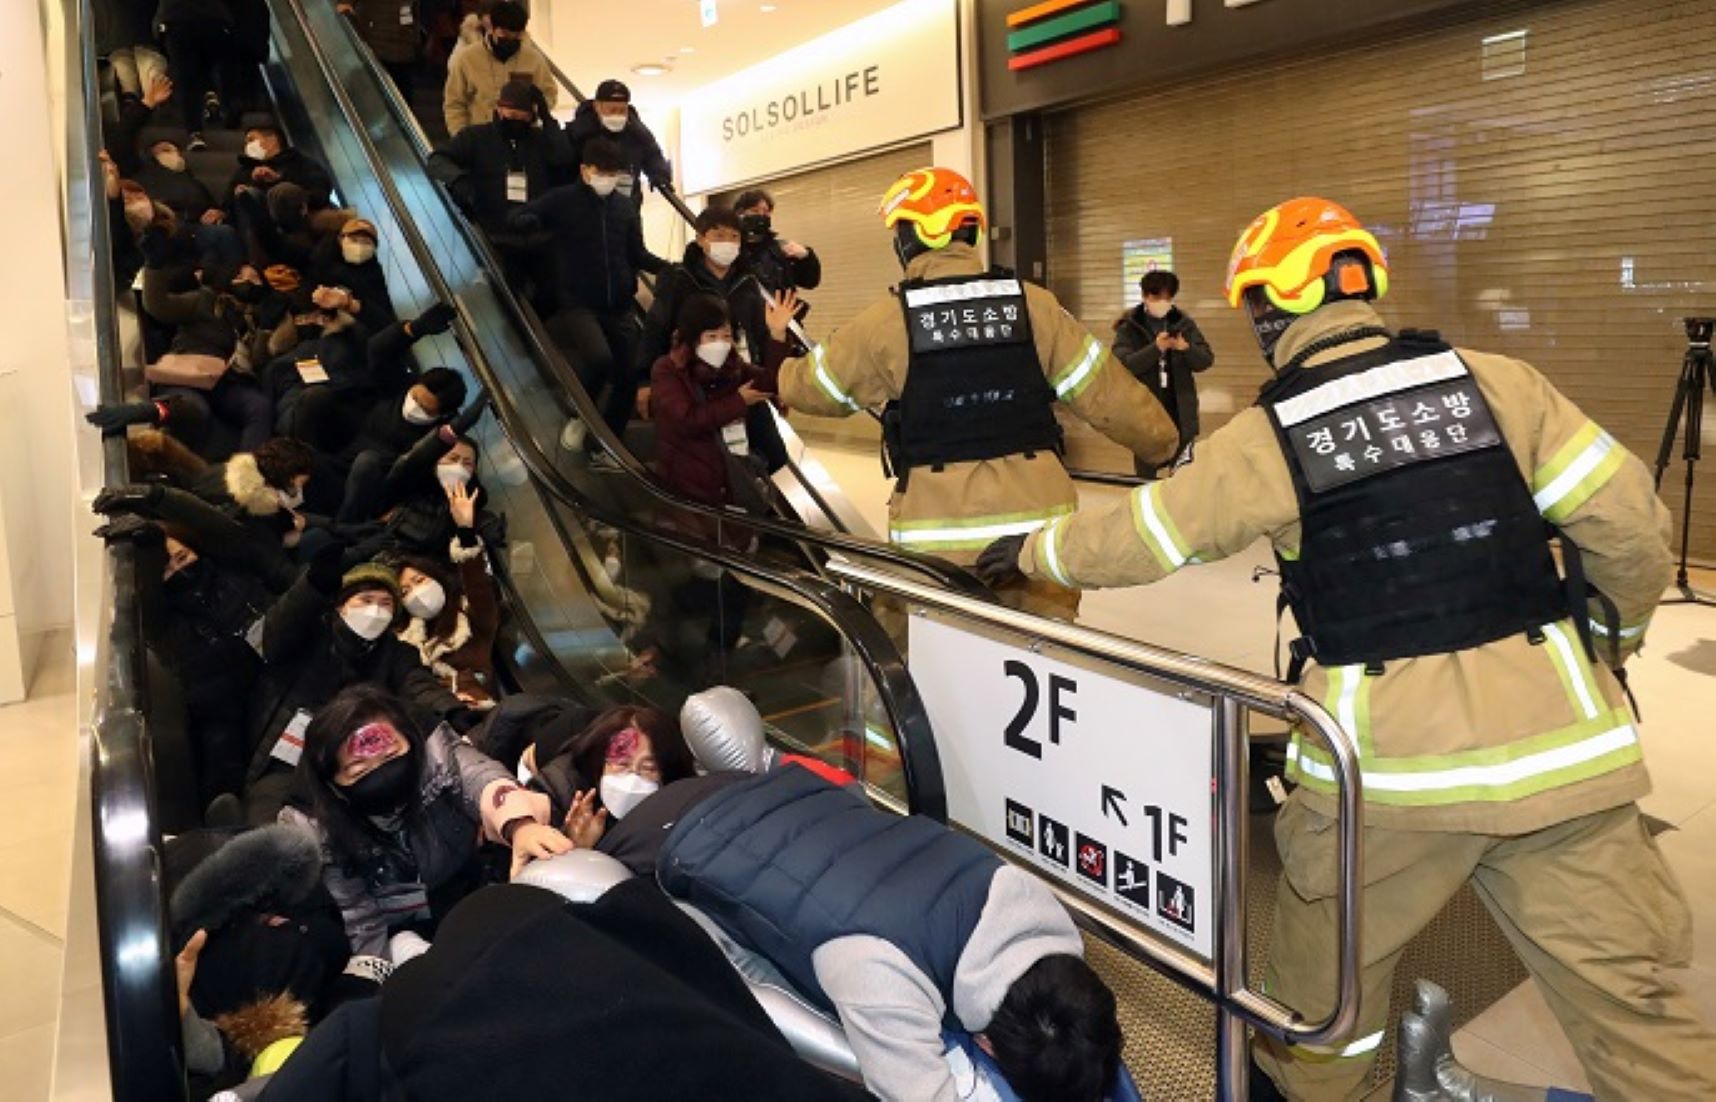 14 Injured In S. Korea’s Escalator Malfunction Accident